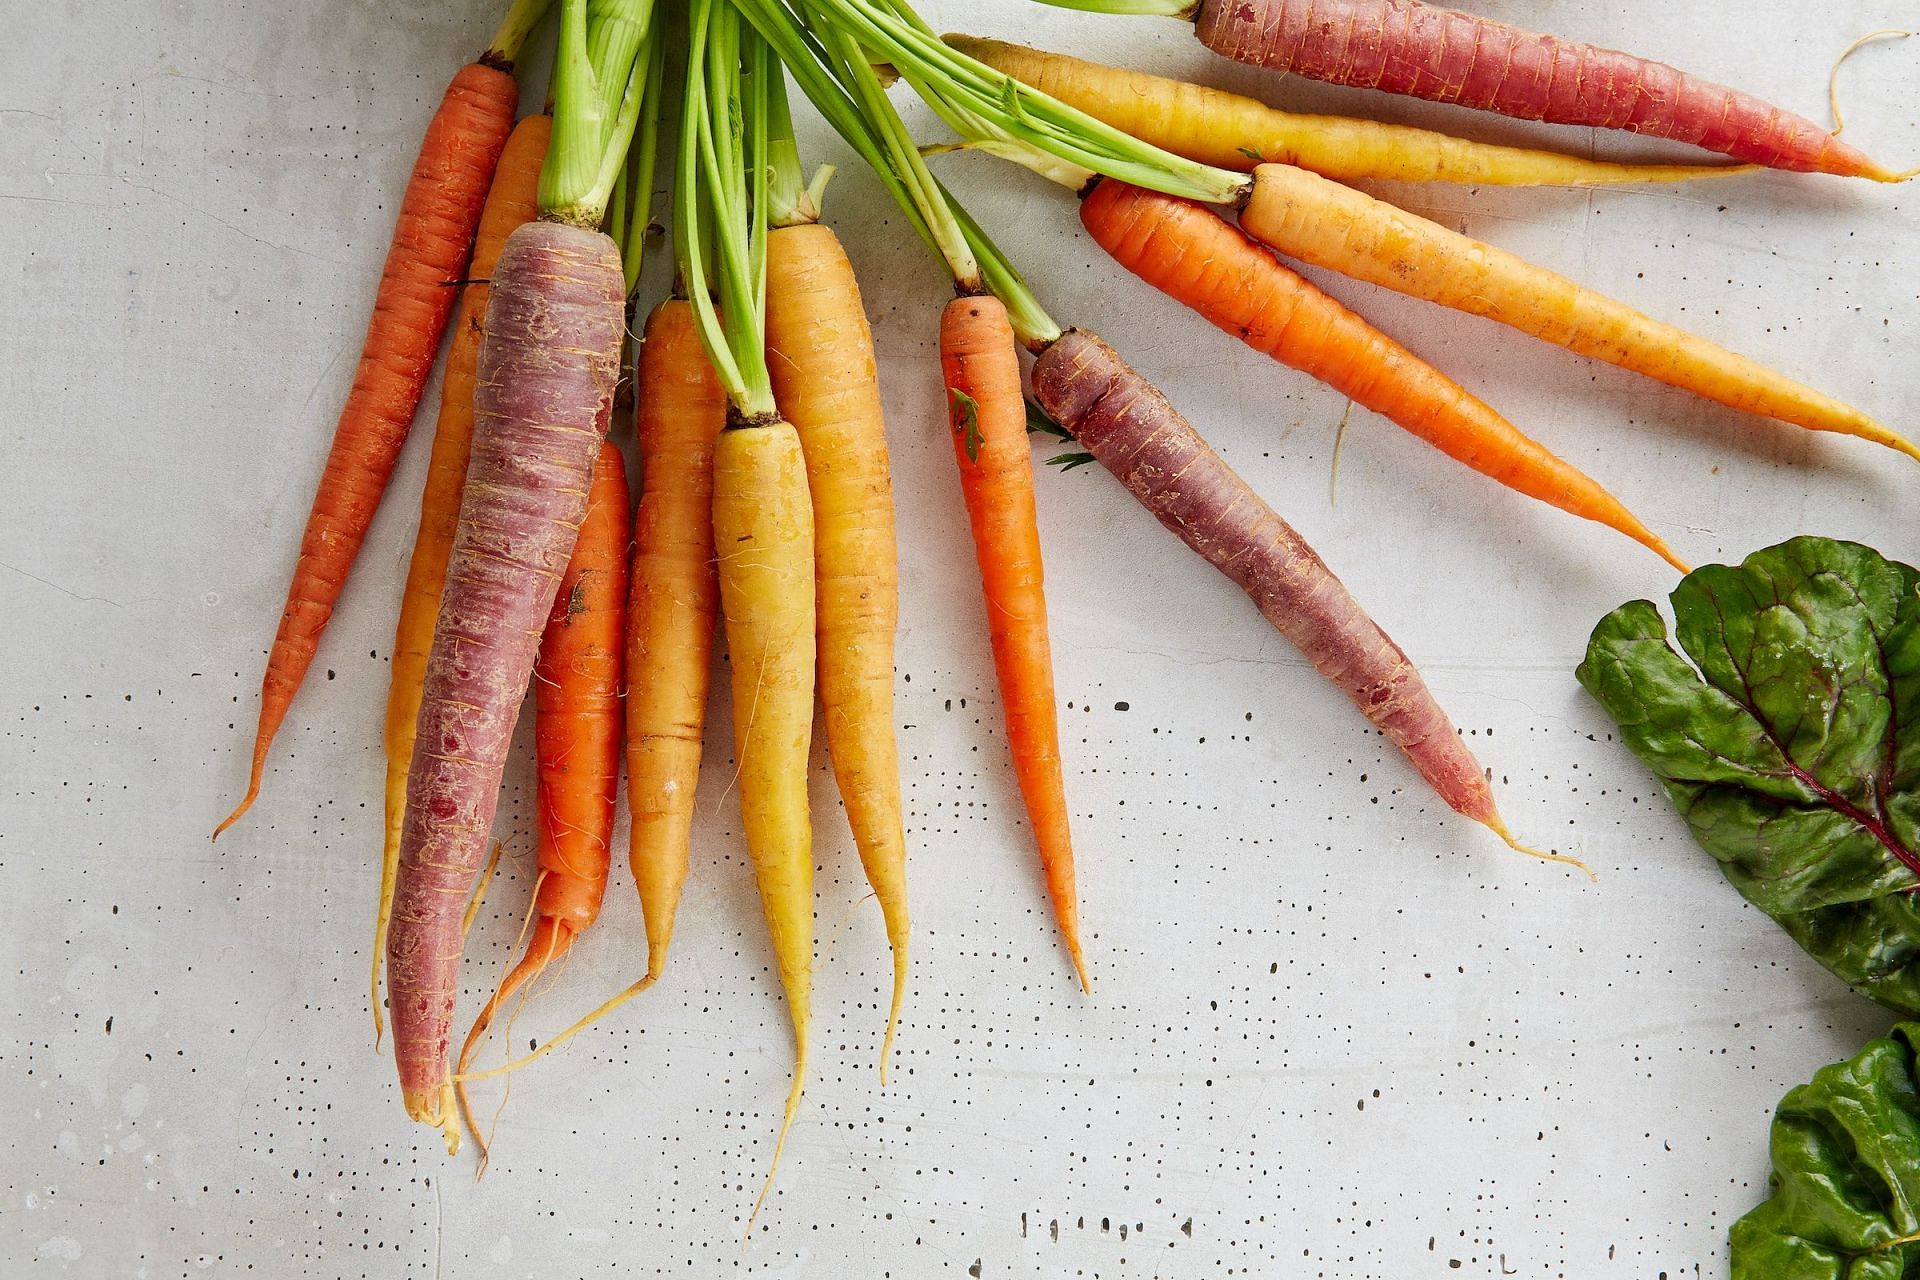 Carrots make coleslaw healthy, (Image via Unsplash/Gabriel Gurrola)